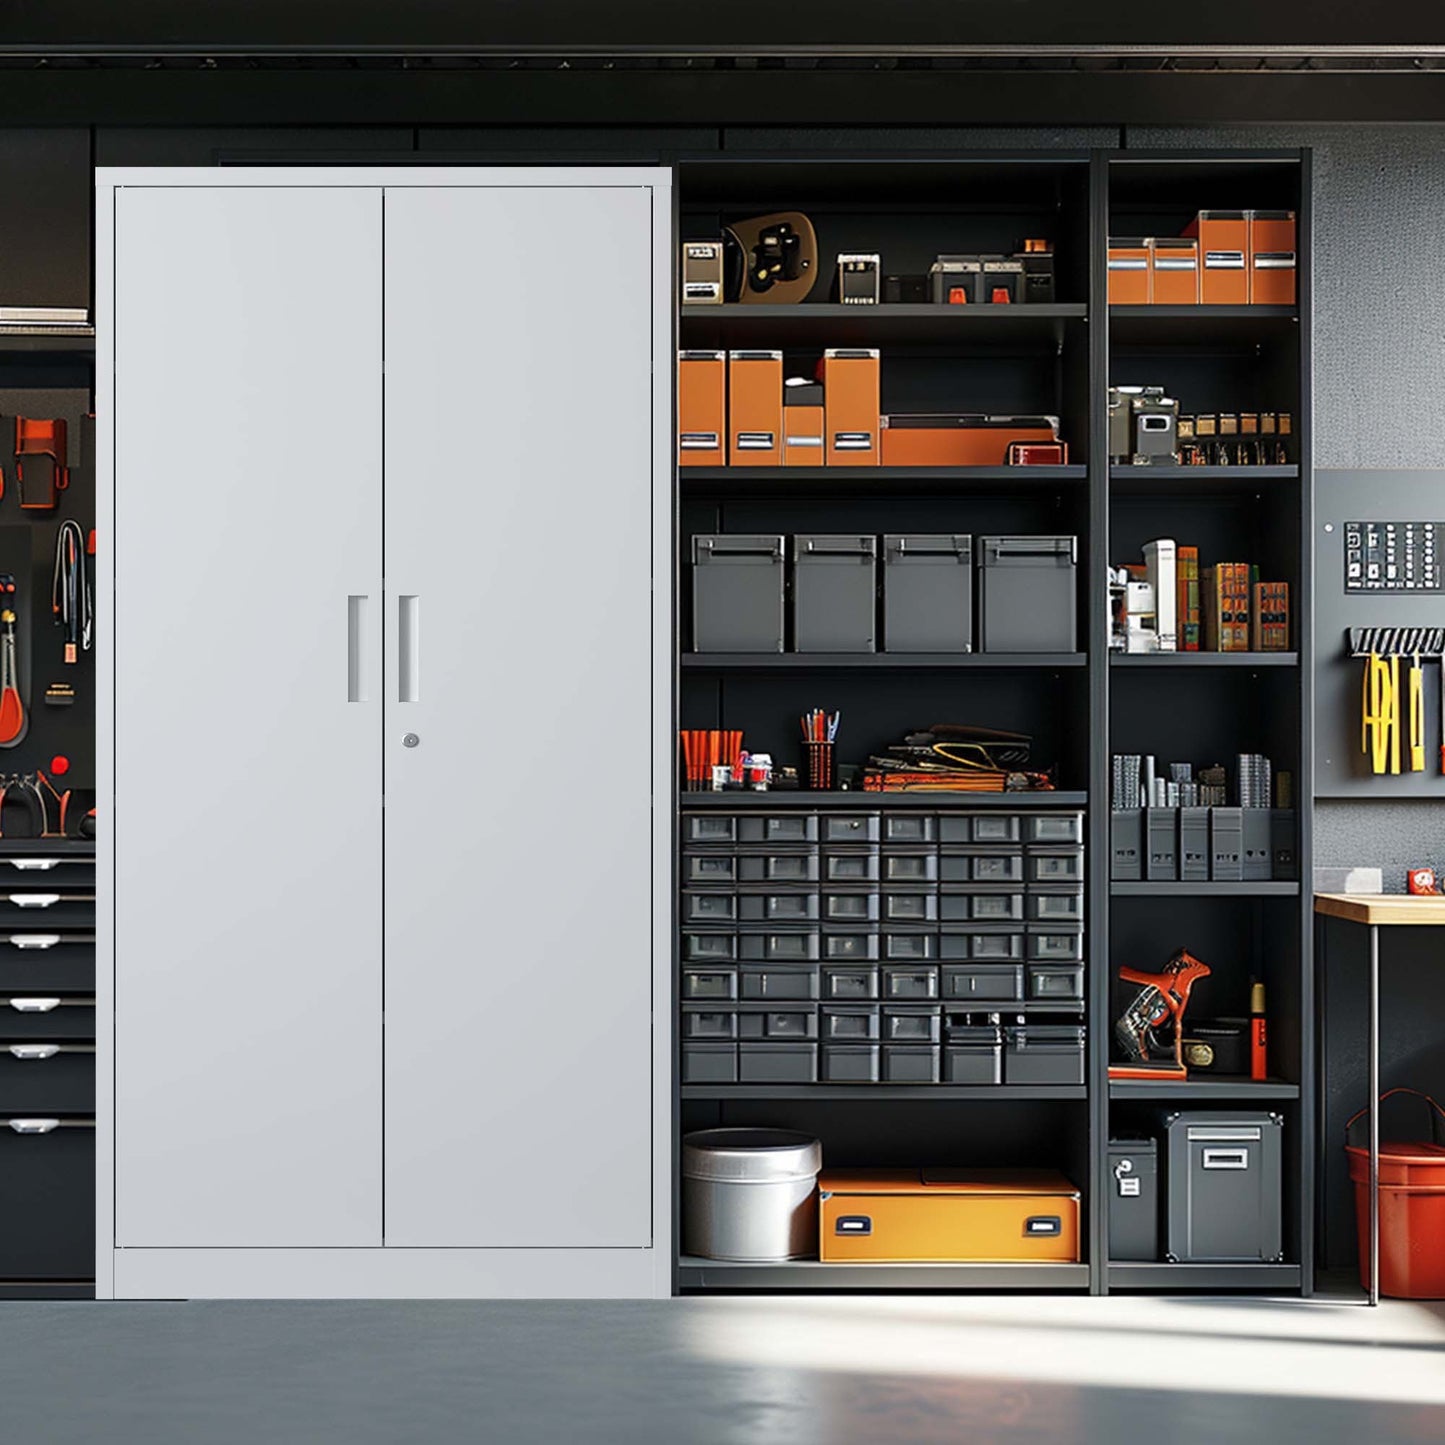 71H Black Steel Garage Storage Cabinet with Locking Doors and Adjustable Shelves